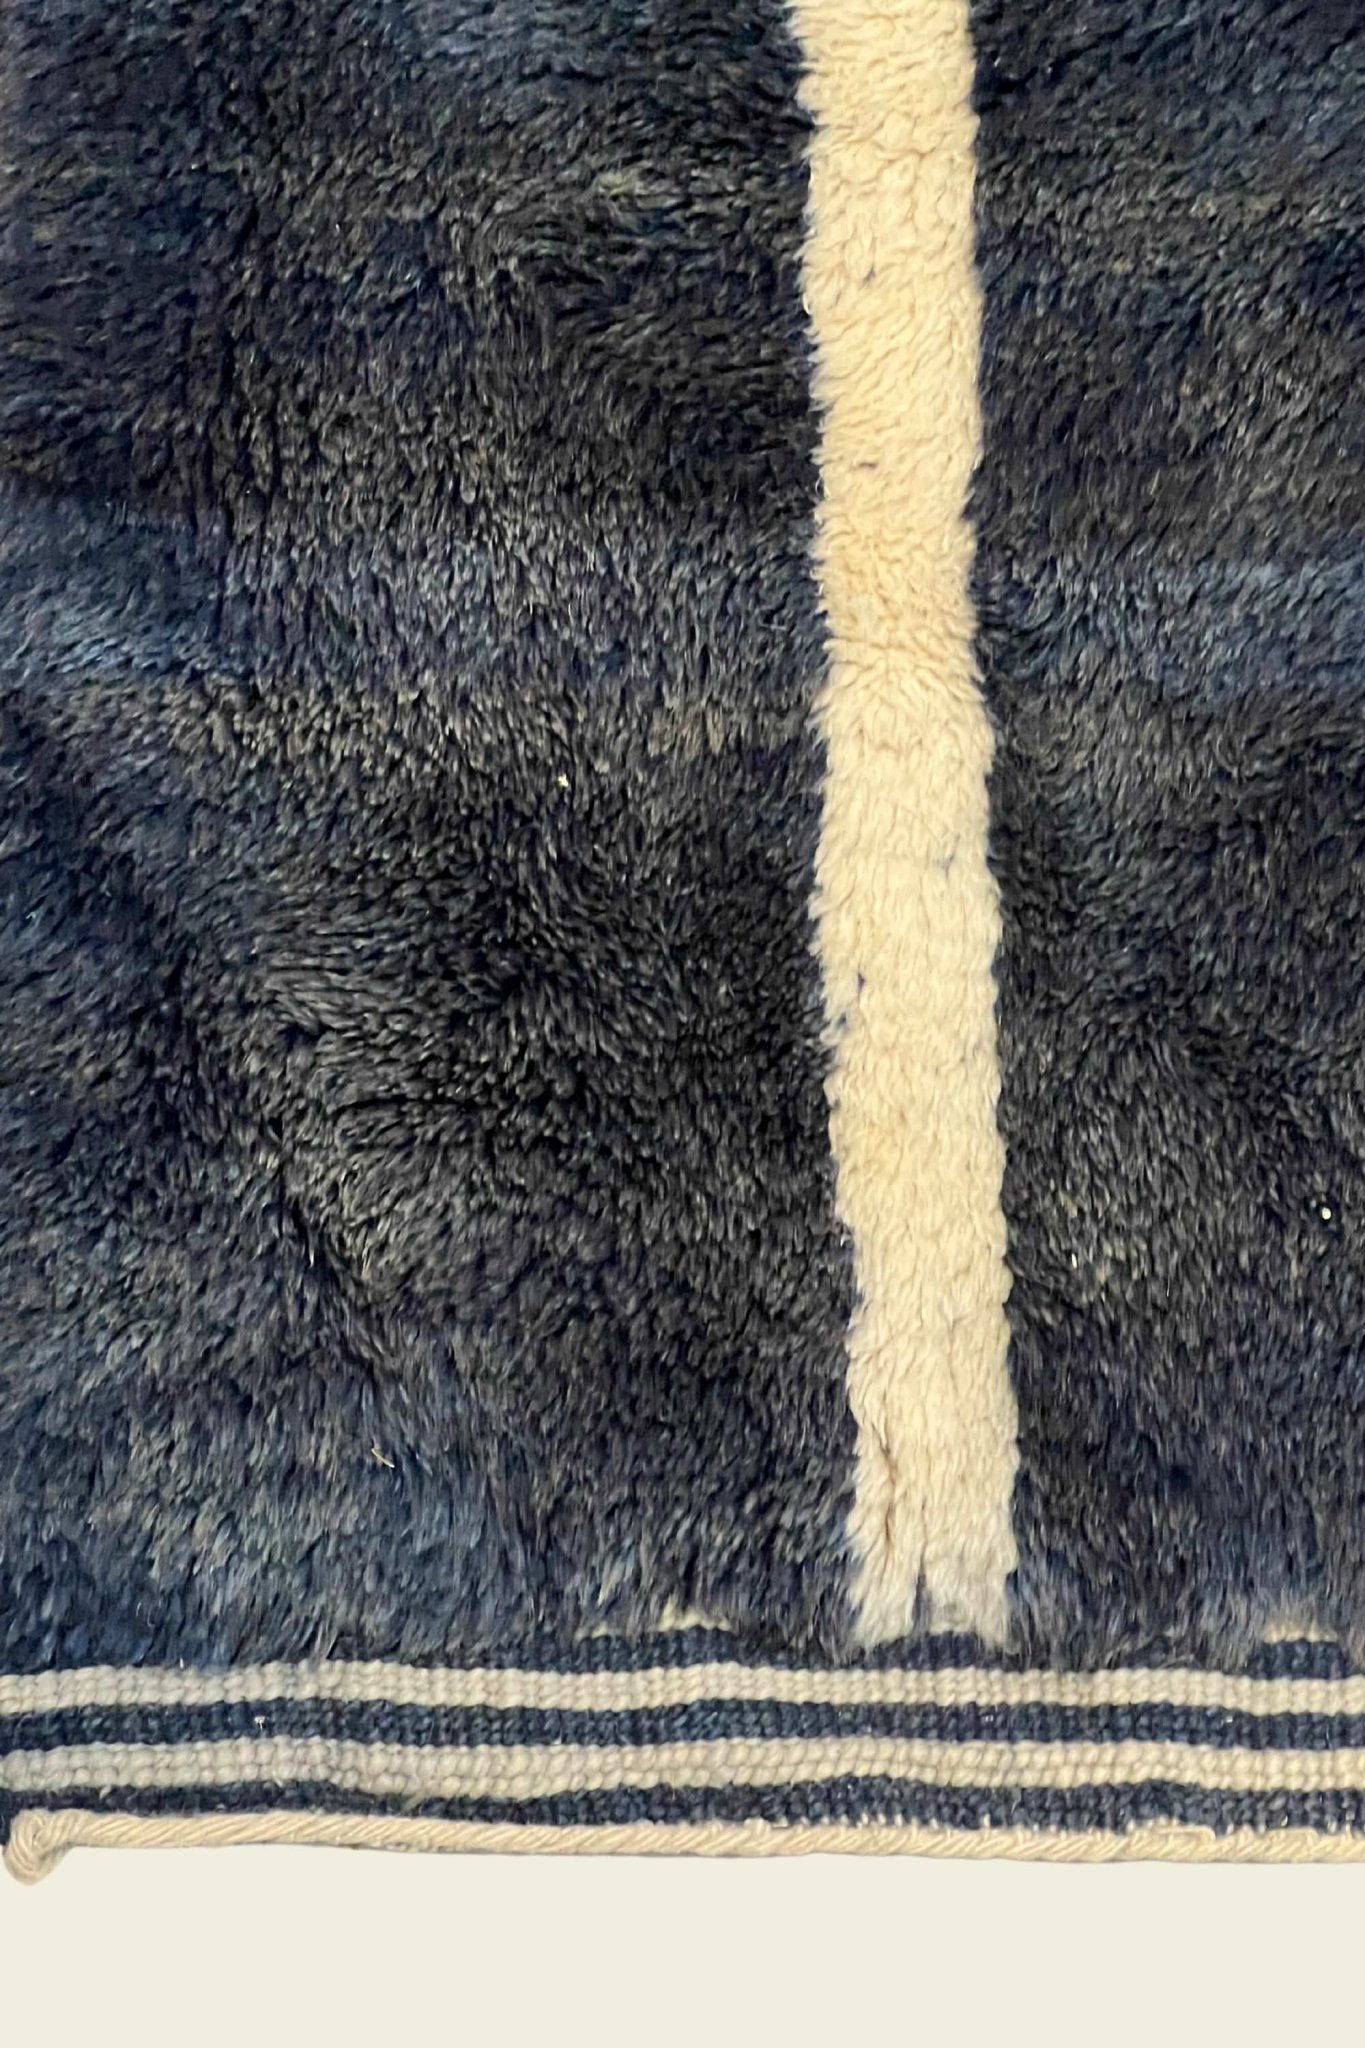 Contemporary Beni Mrirt Berber Rug 6'00" x 9'58" - 183 cm x 292 cm (Wool) - Dar Bouchaib Marrakech